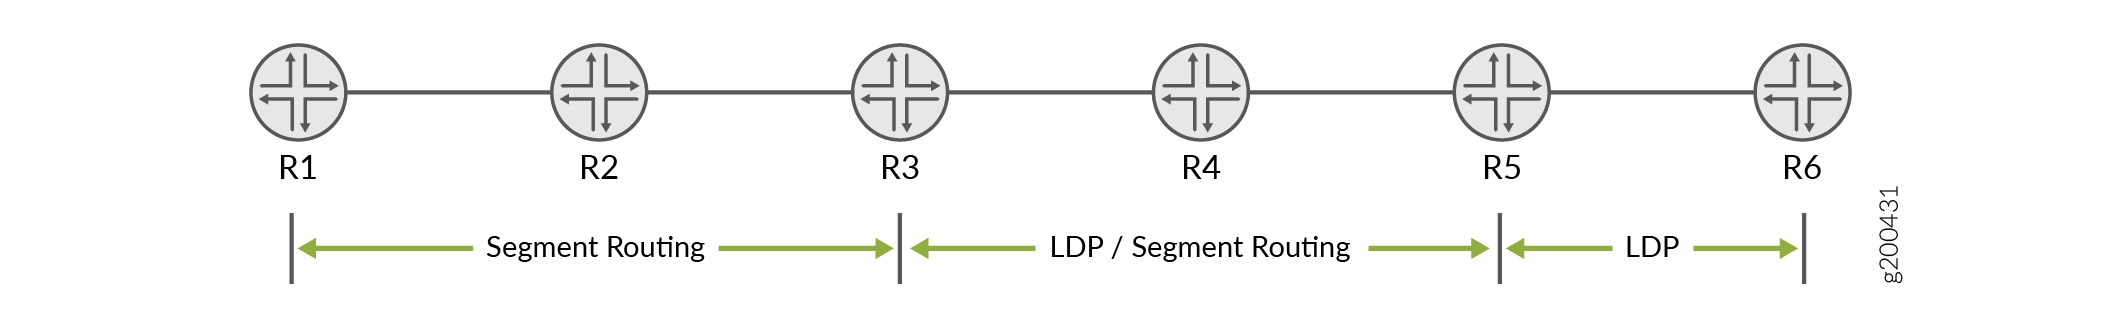 Sample Segment Routing to LDP Interoperation Topology